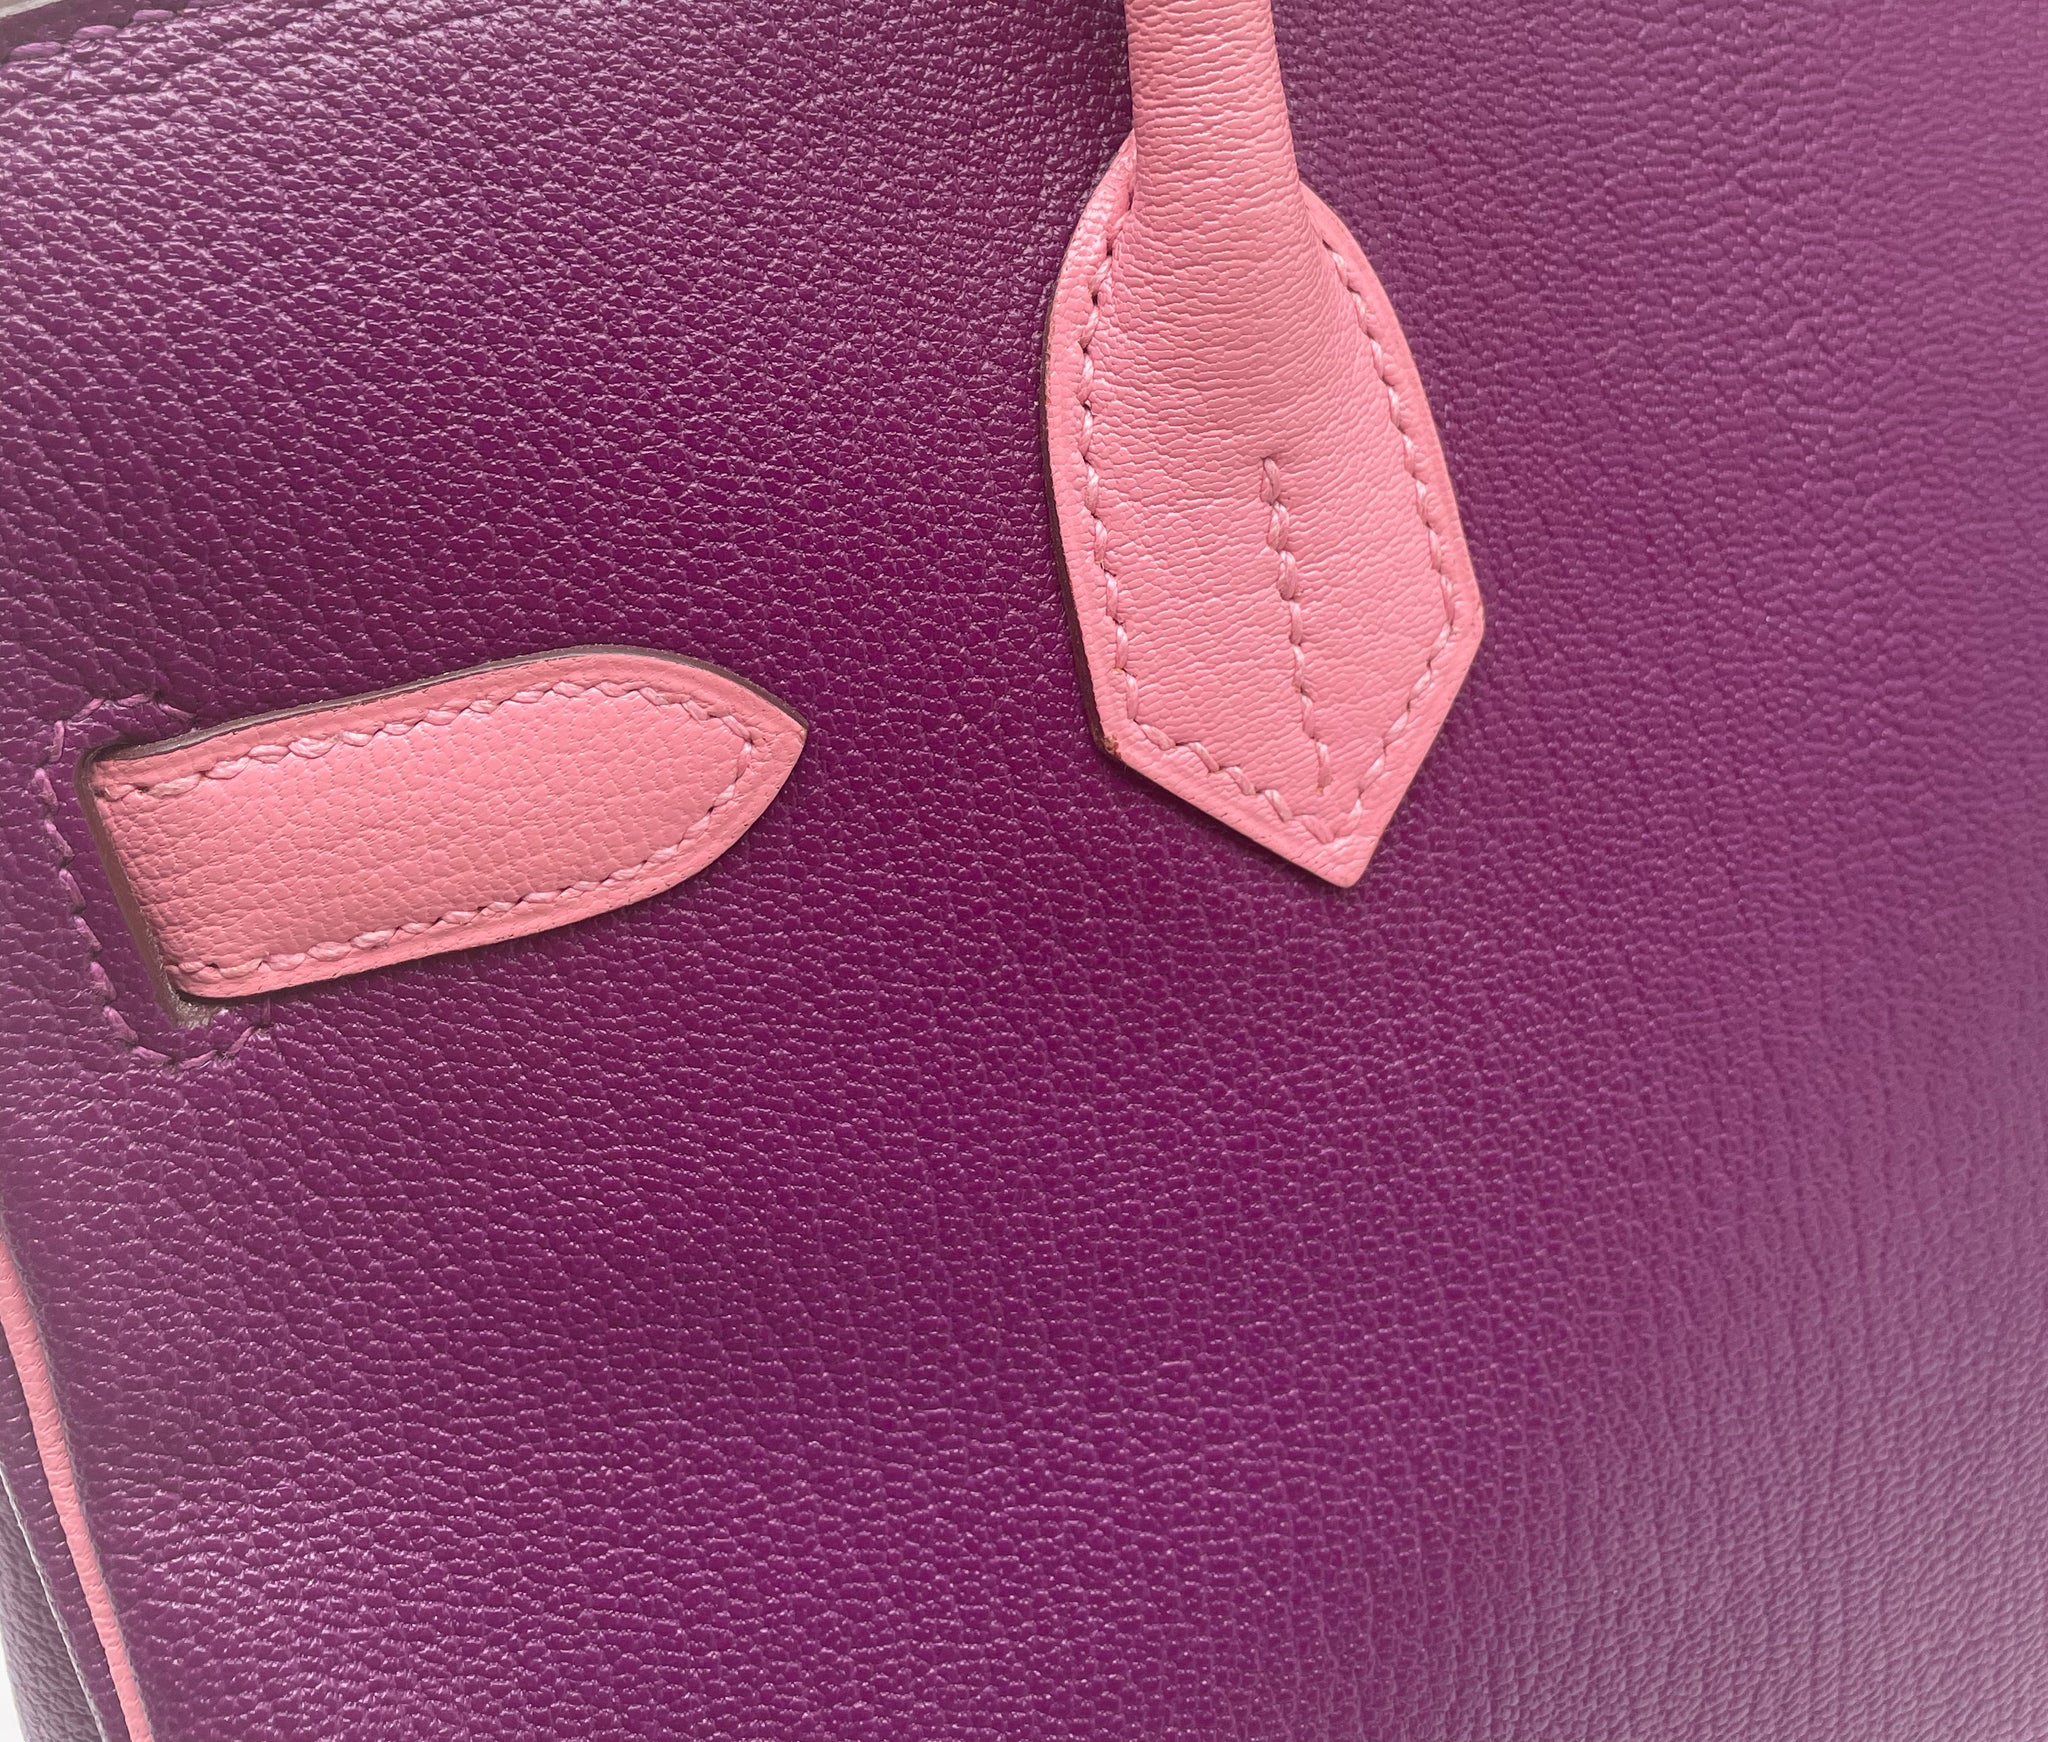 Hermes Rose Confetti Pink Anemone Chevre Birkin 30 Handbag